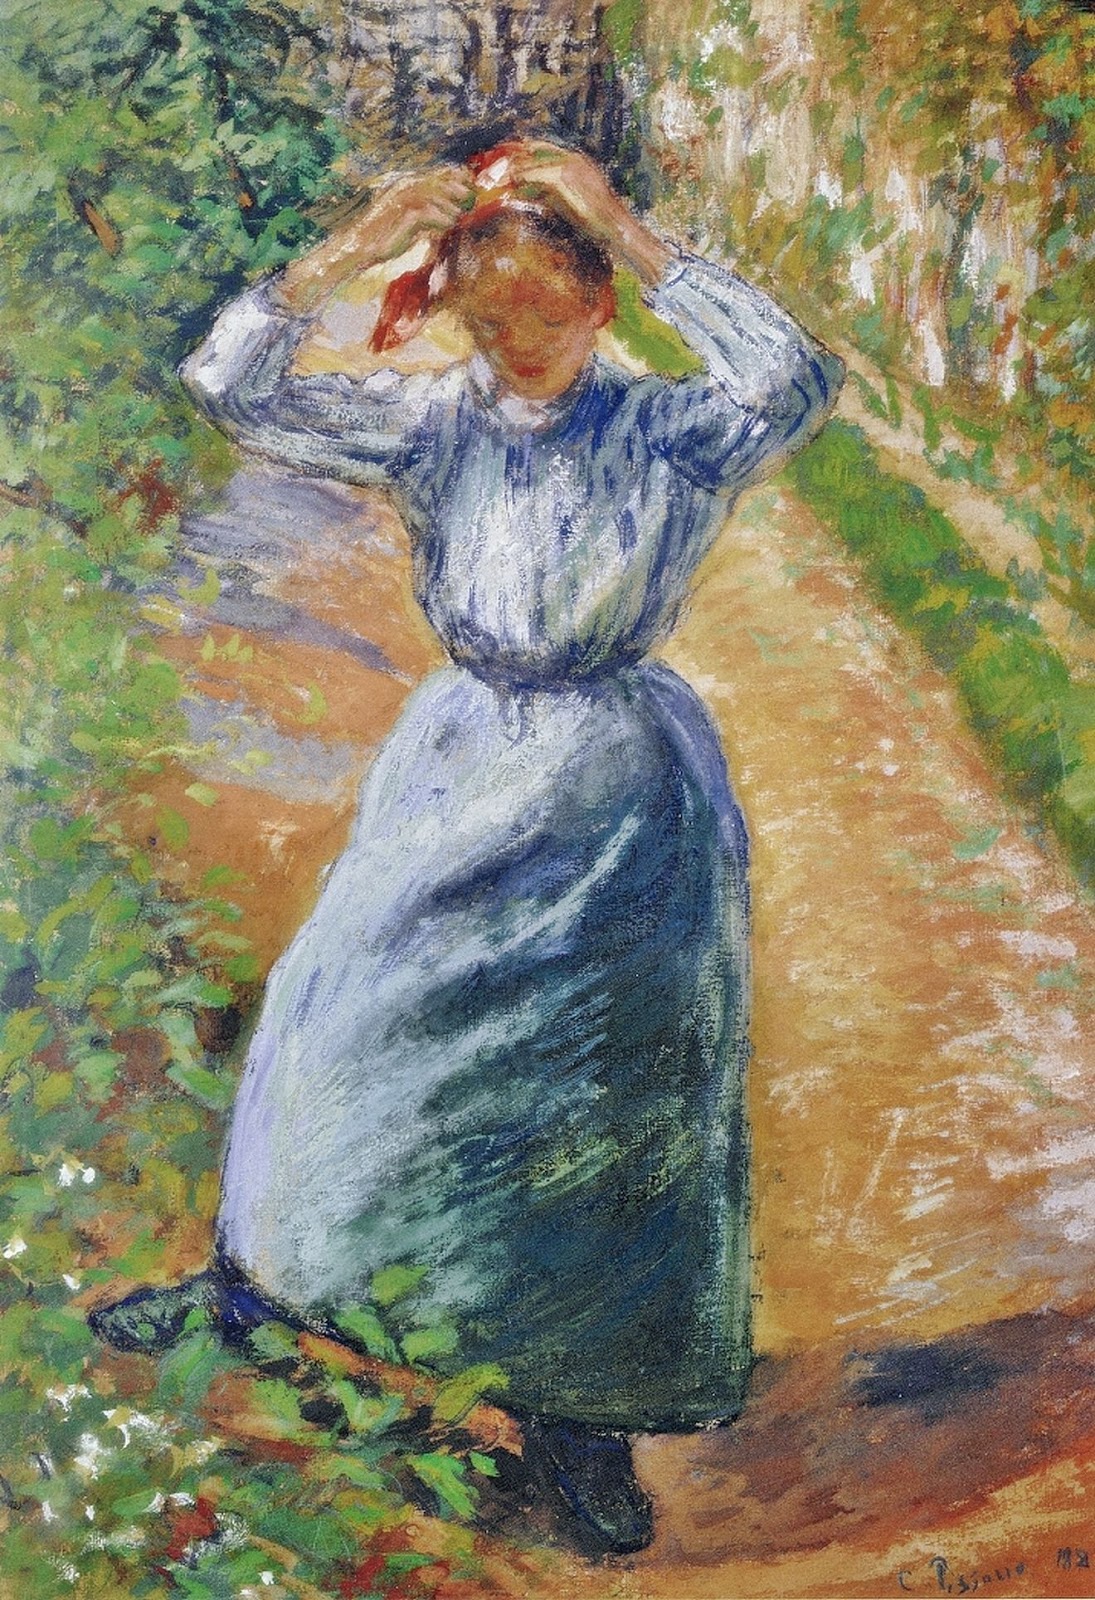 Camille+Pissarro-1830-1903 (316).jpg